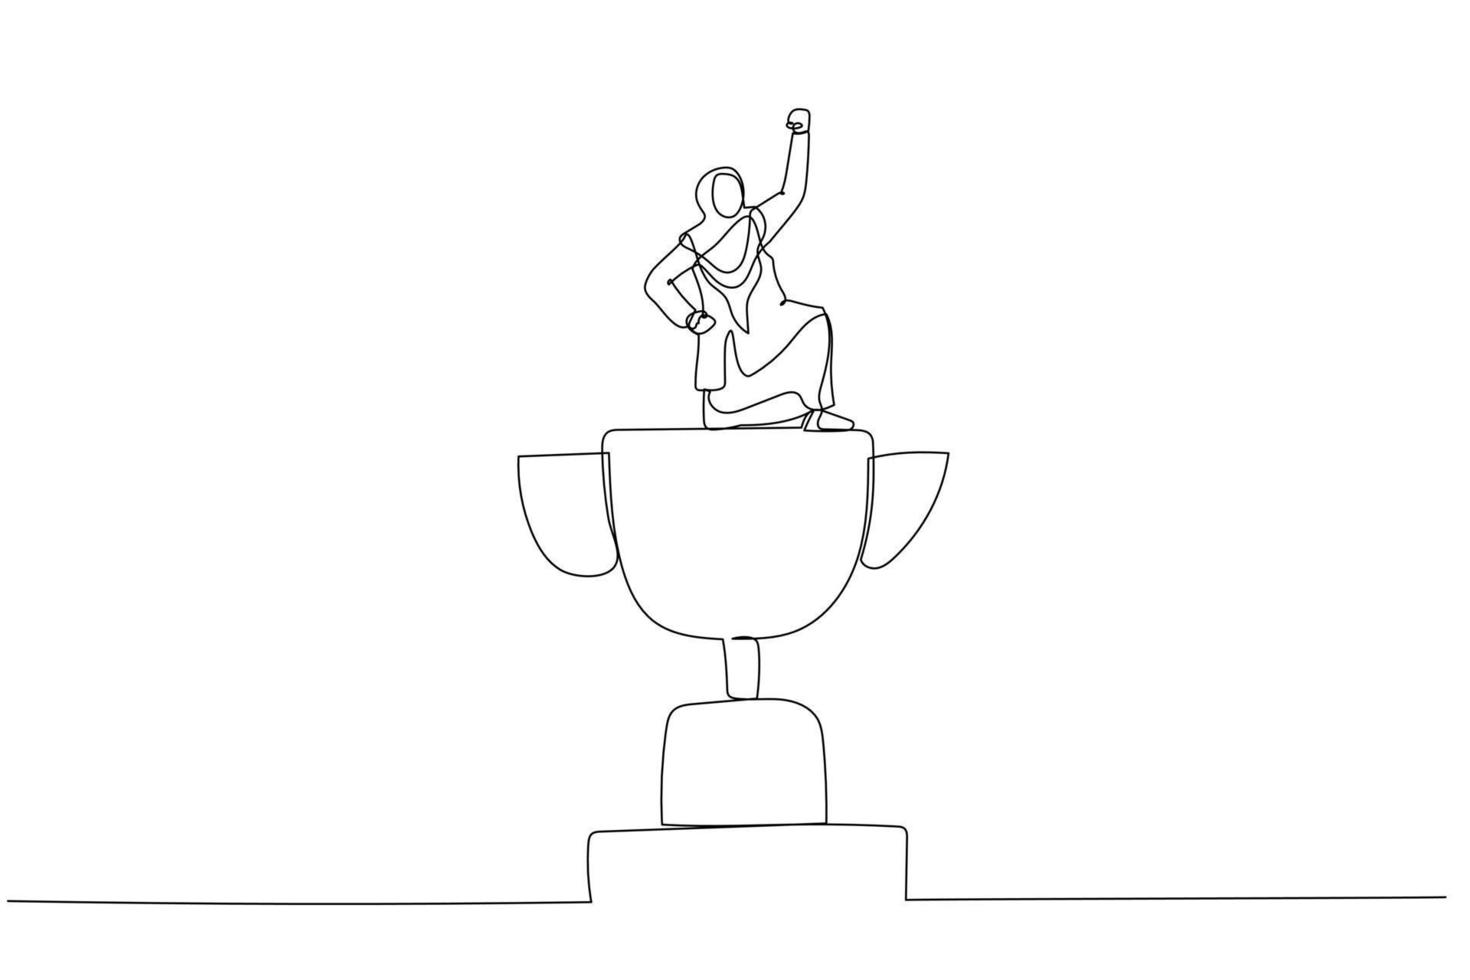 Drawing of muslim businesswoman winner raising flag on winning trophy get victory. Single line art style vector